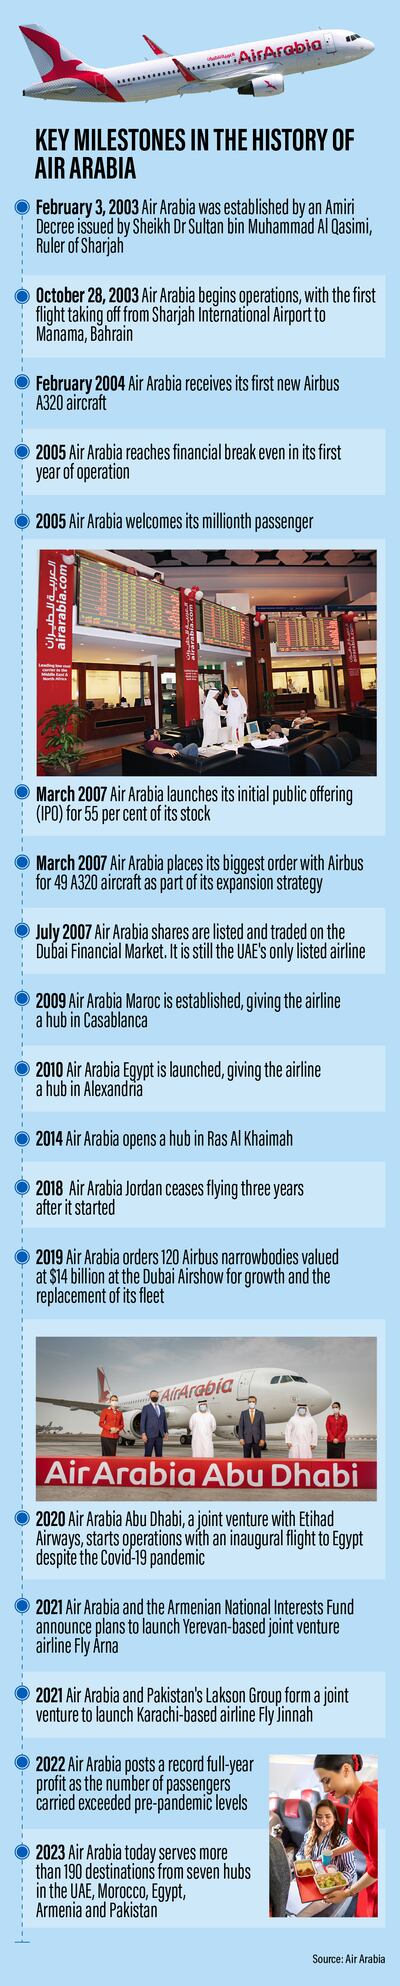 History of Air Arabia